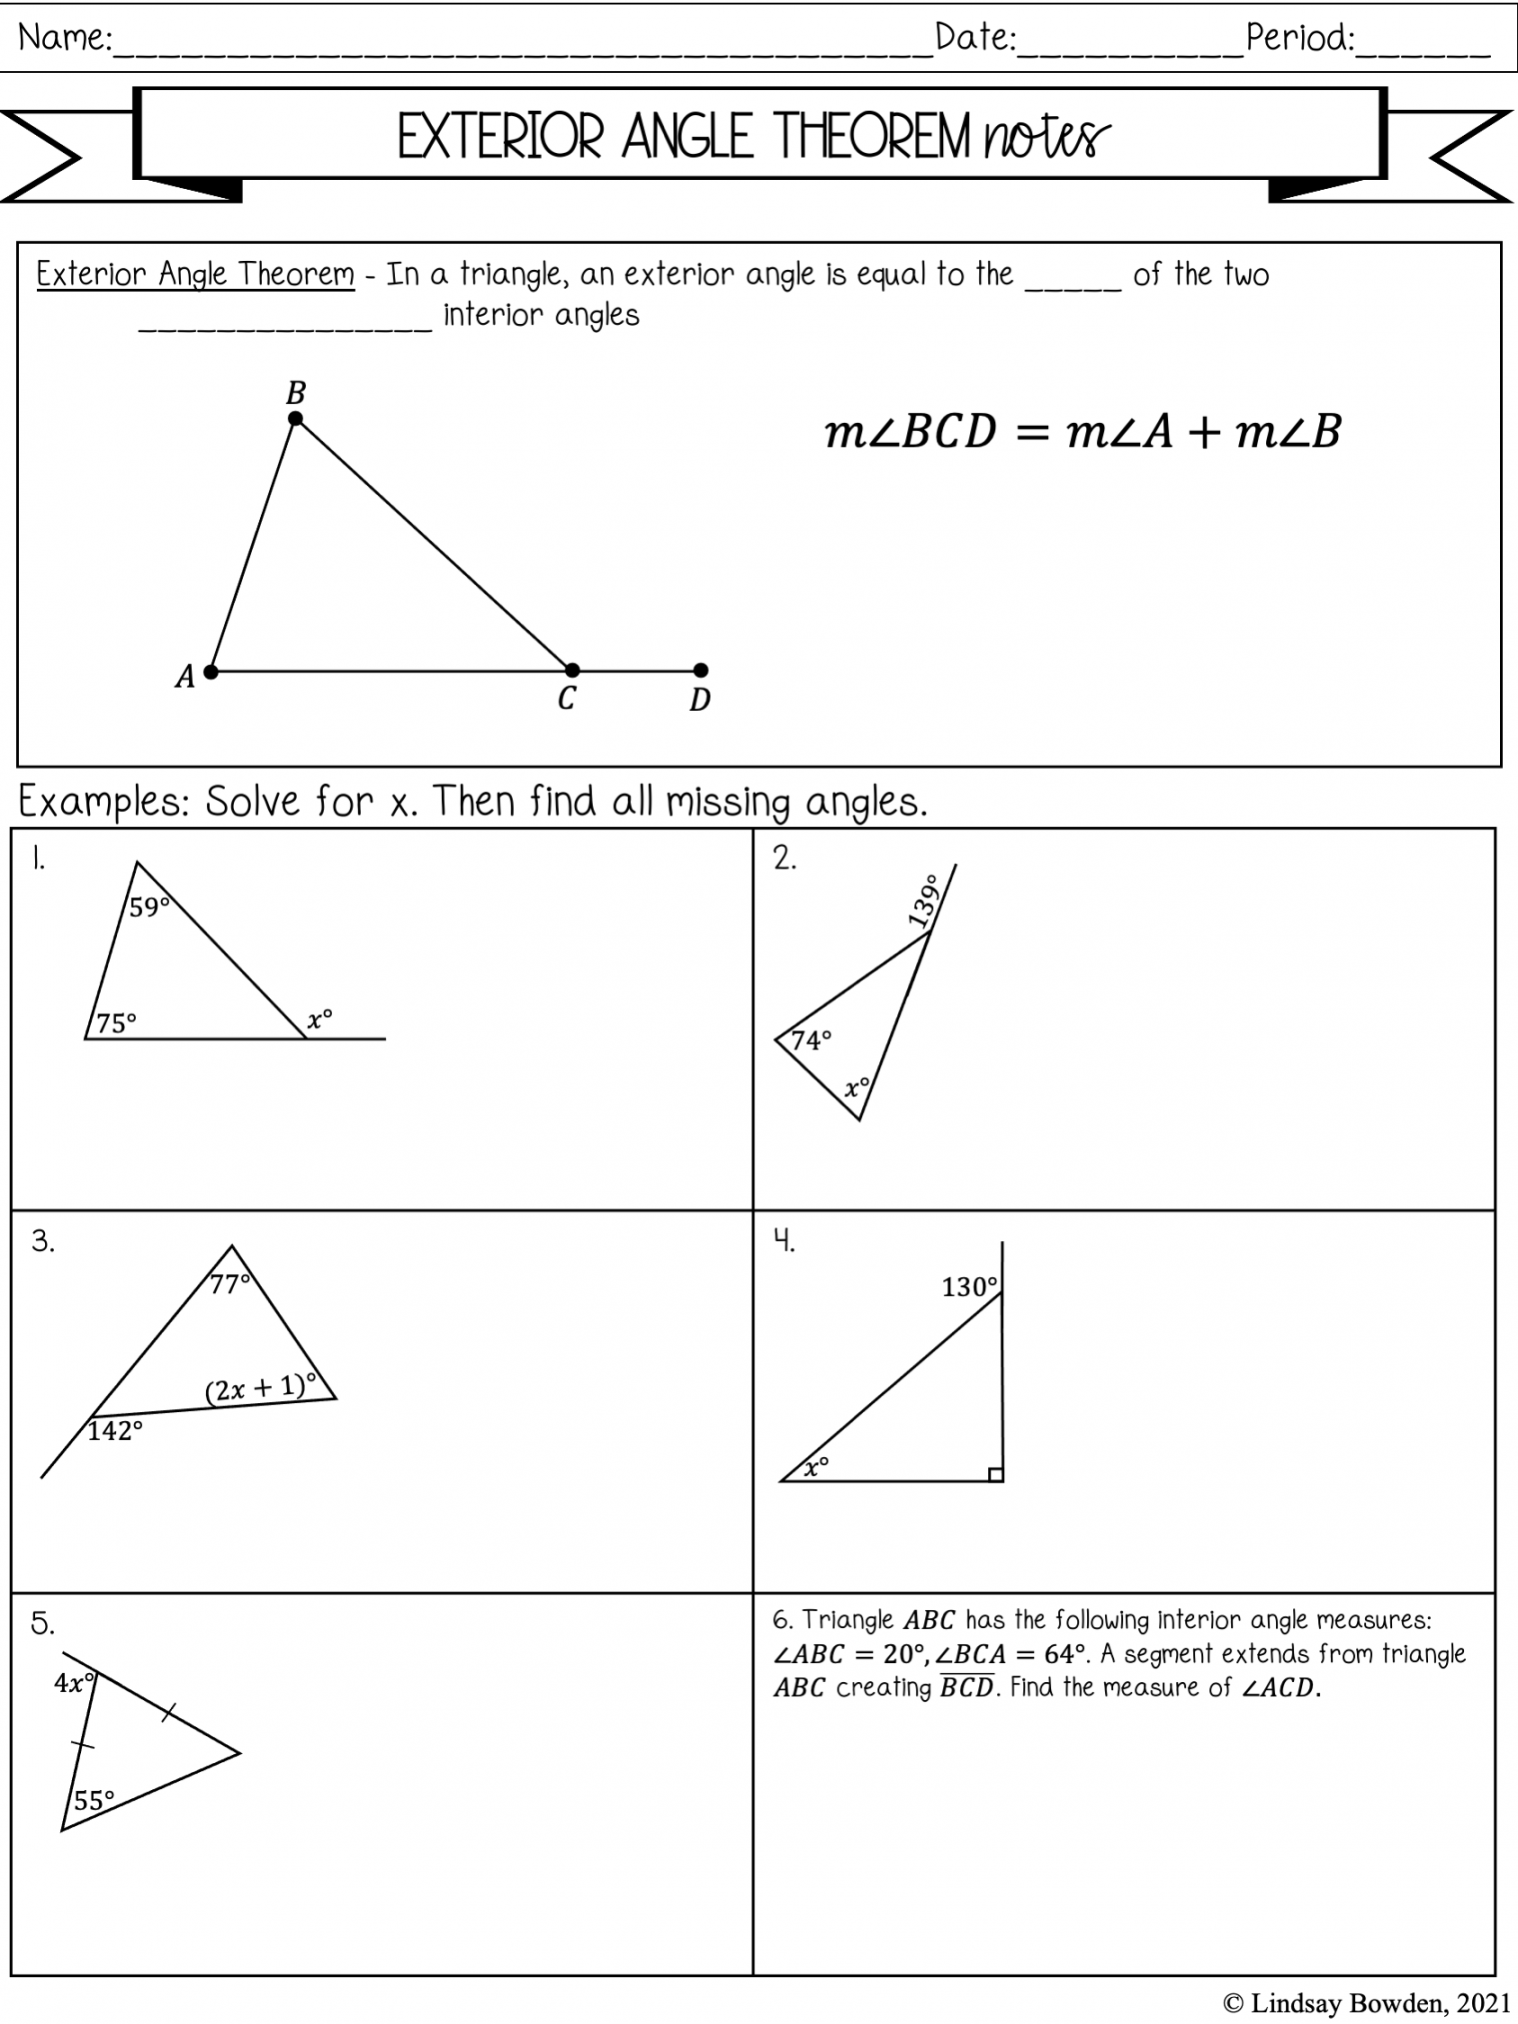 Exterior Angle Theorem Notes & Worksheets - Lindsay Bowden